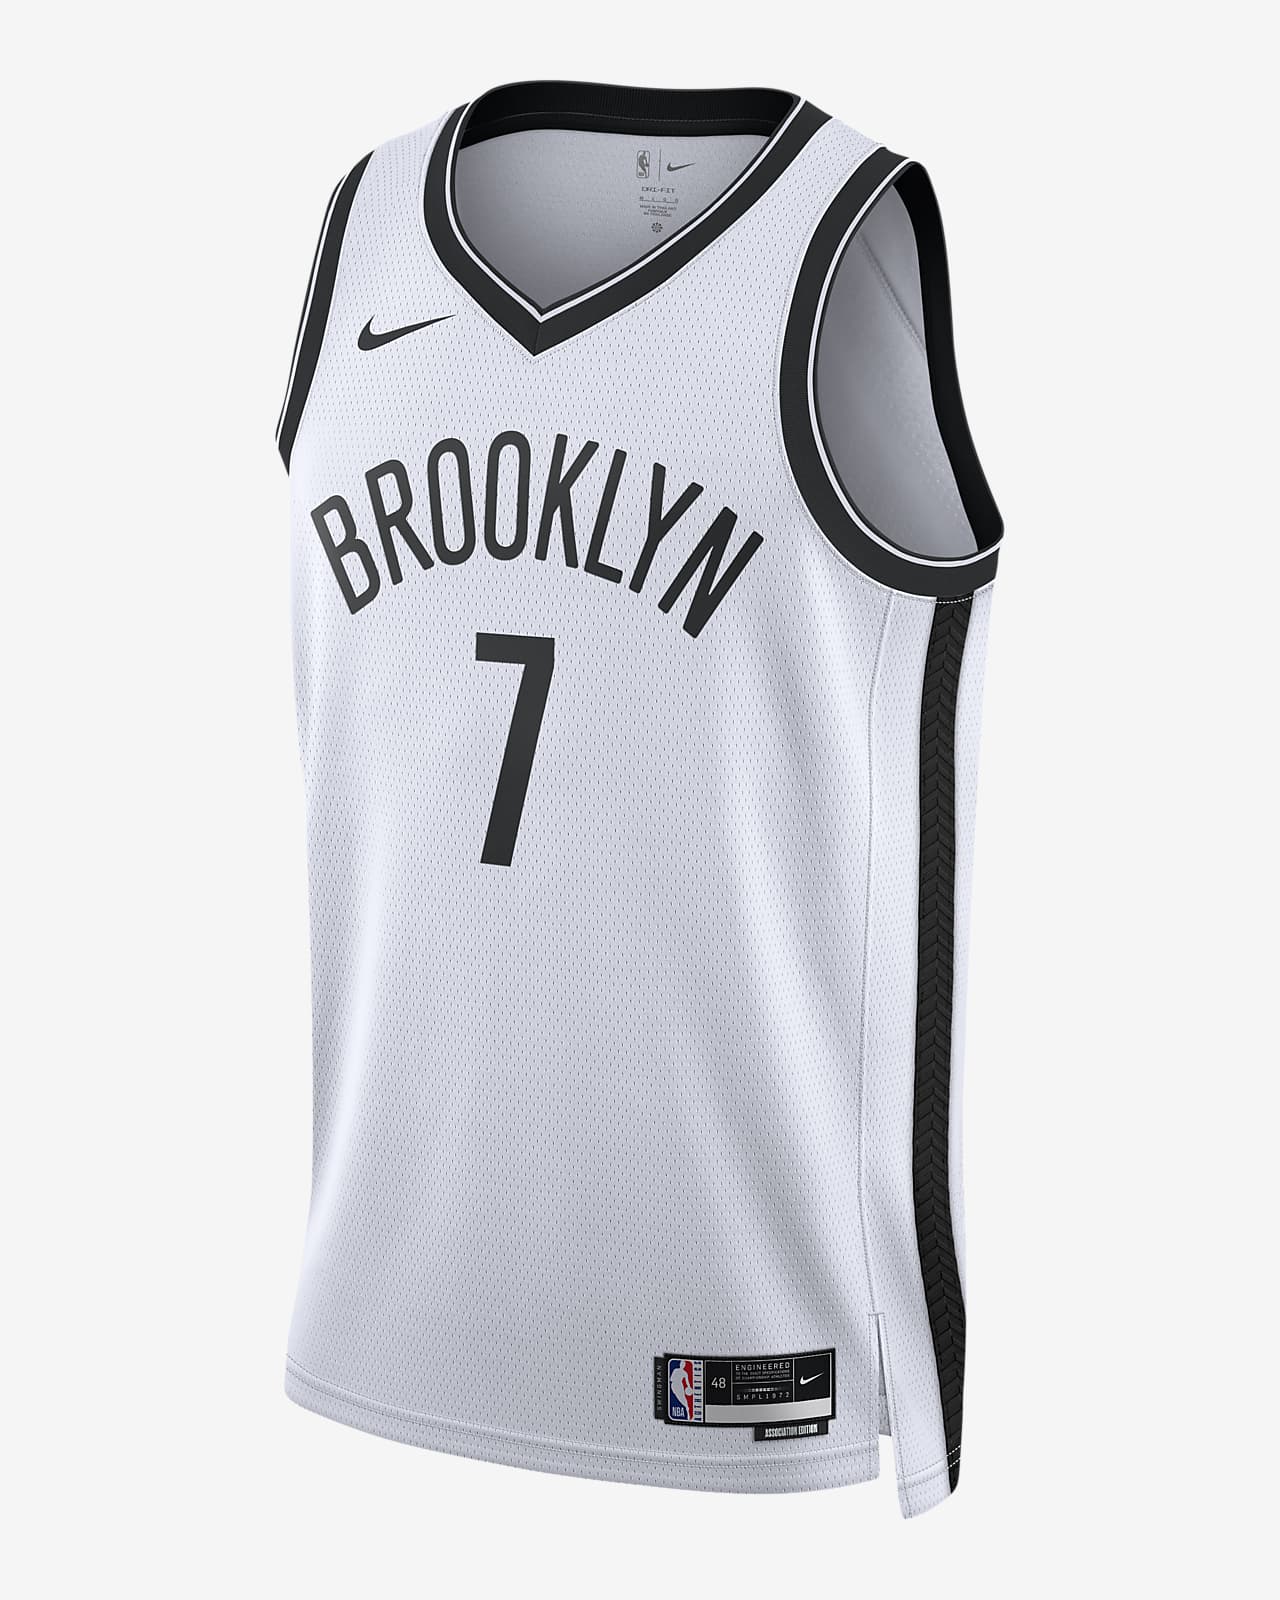 Brooklyn Nets Association Edition Nike NBA Jersey.